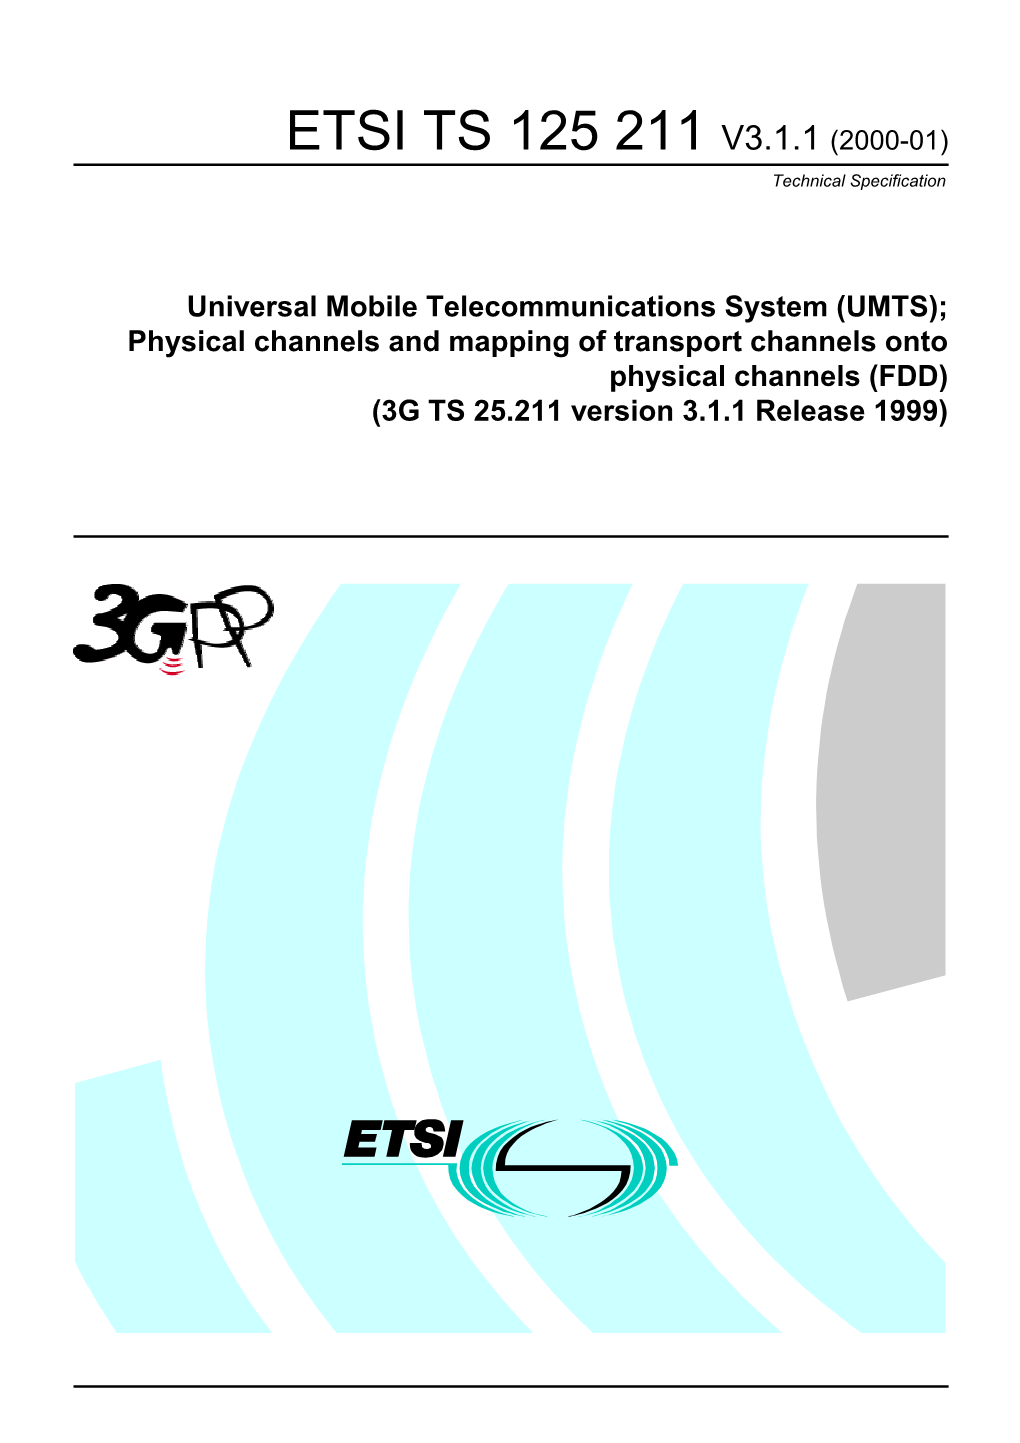 TS 125 211 V3.1.1 (2000-01) Technical Specification